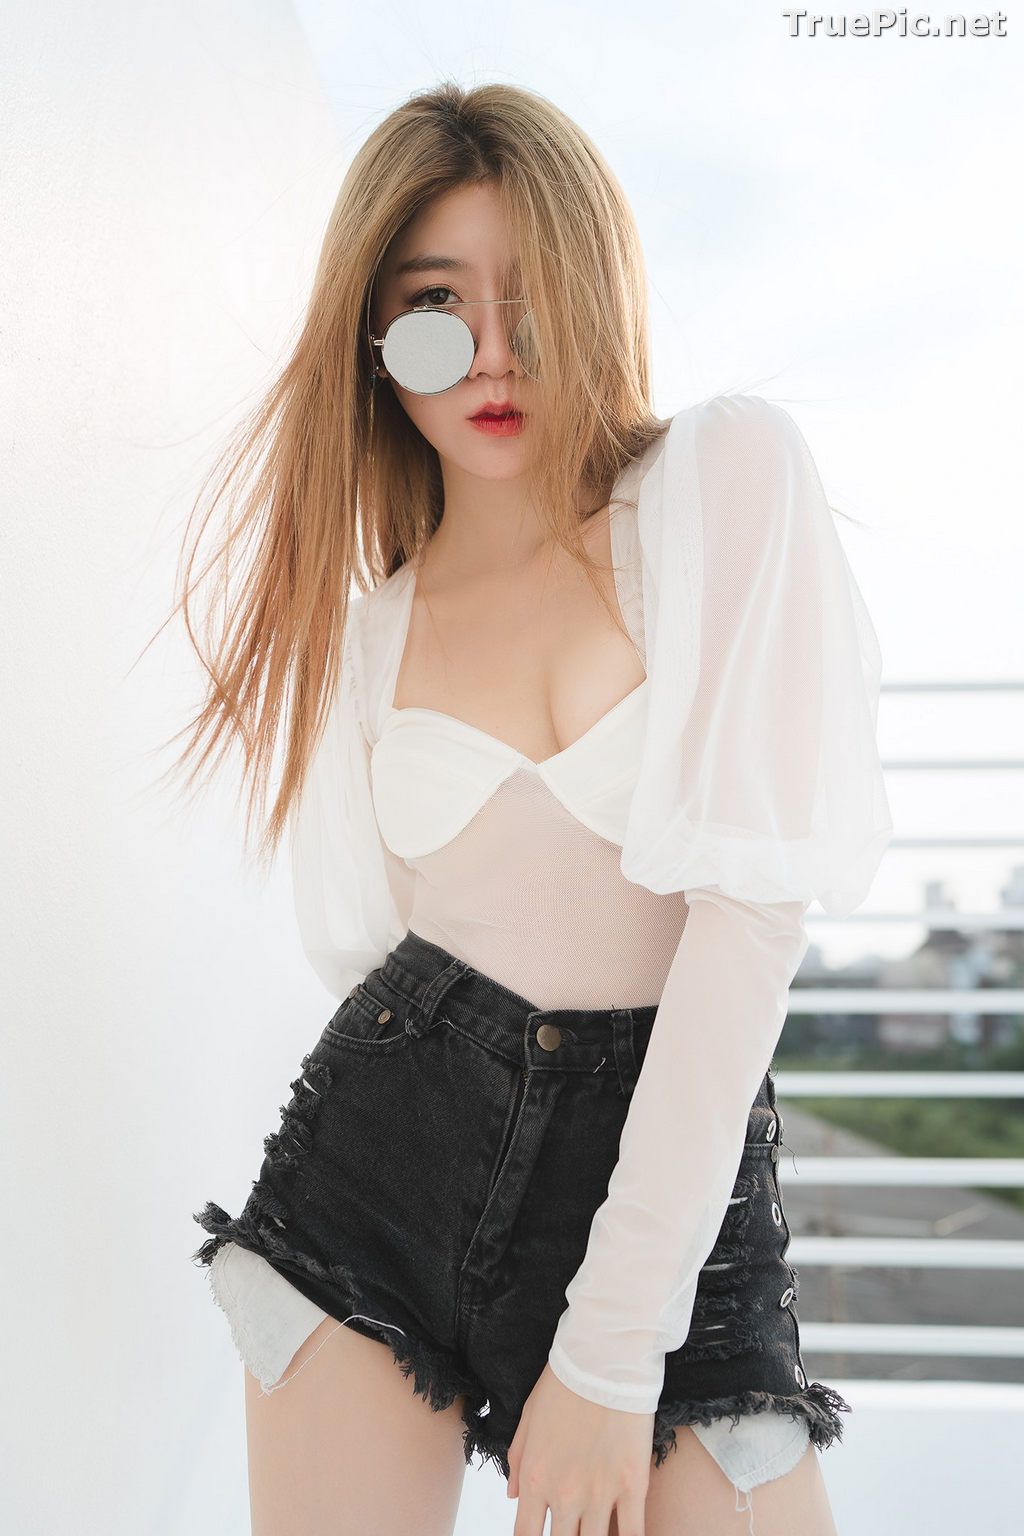 Image Thailand Model - Sasi Ngiunwan - Transparent Shirt and Short Pants - TruePic.net - Picture-14